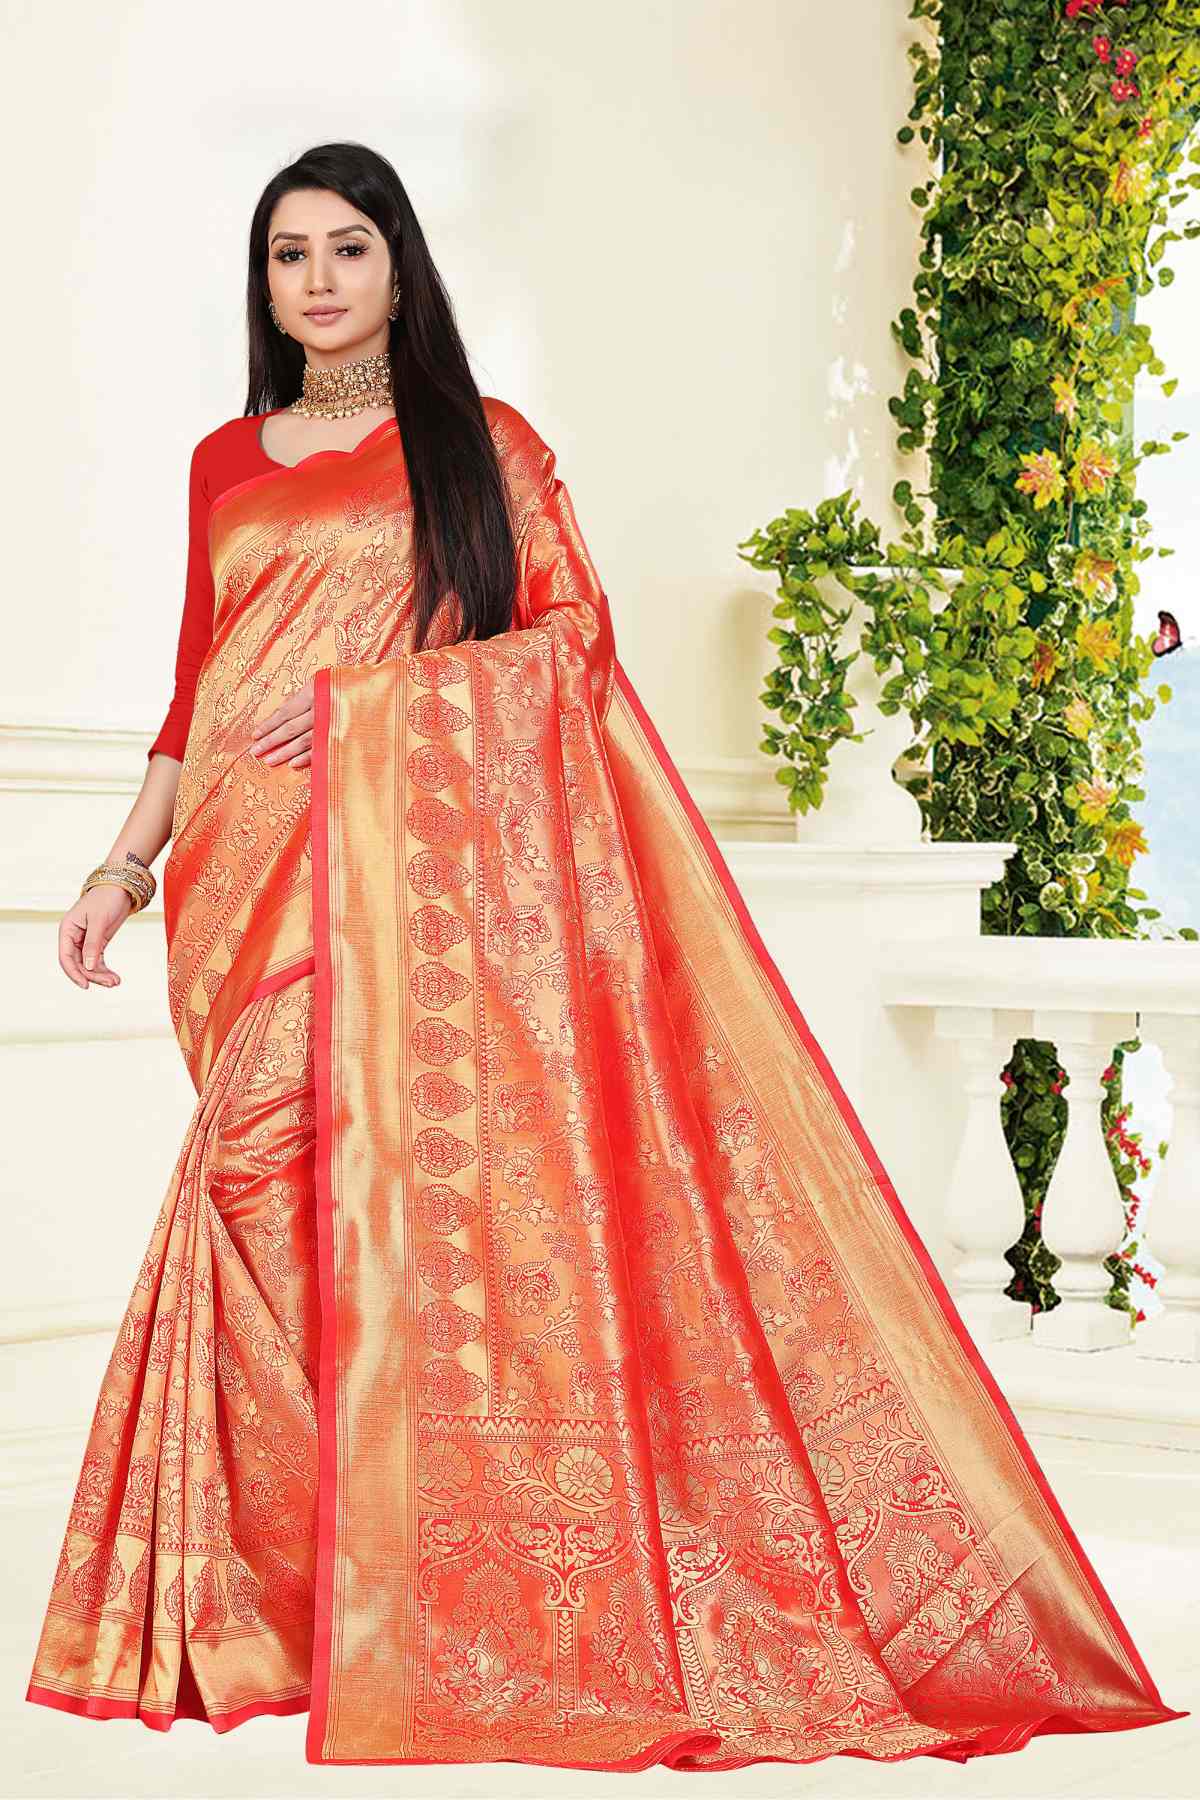 Sudarshan silks latest Fancy Silk Saree